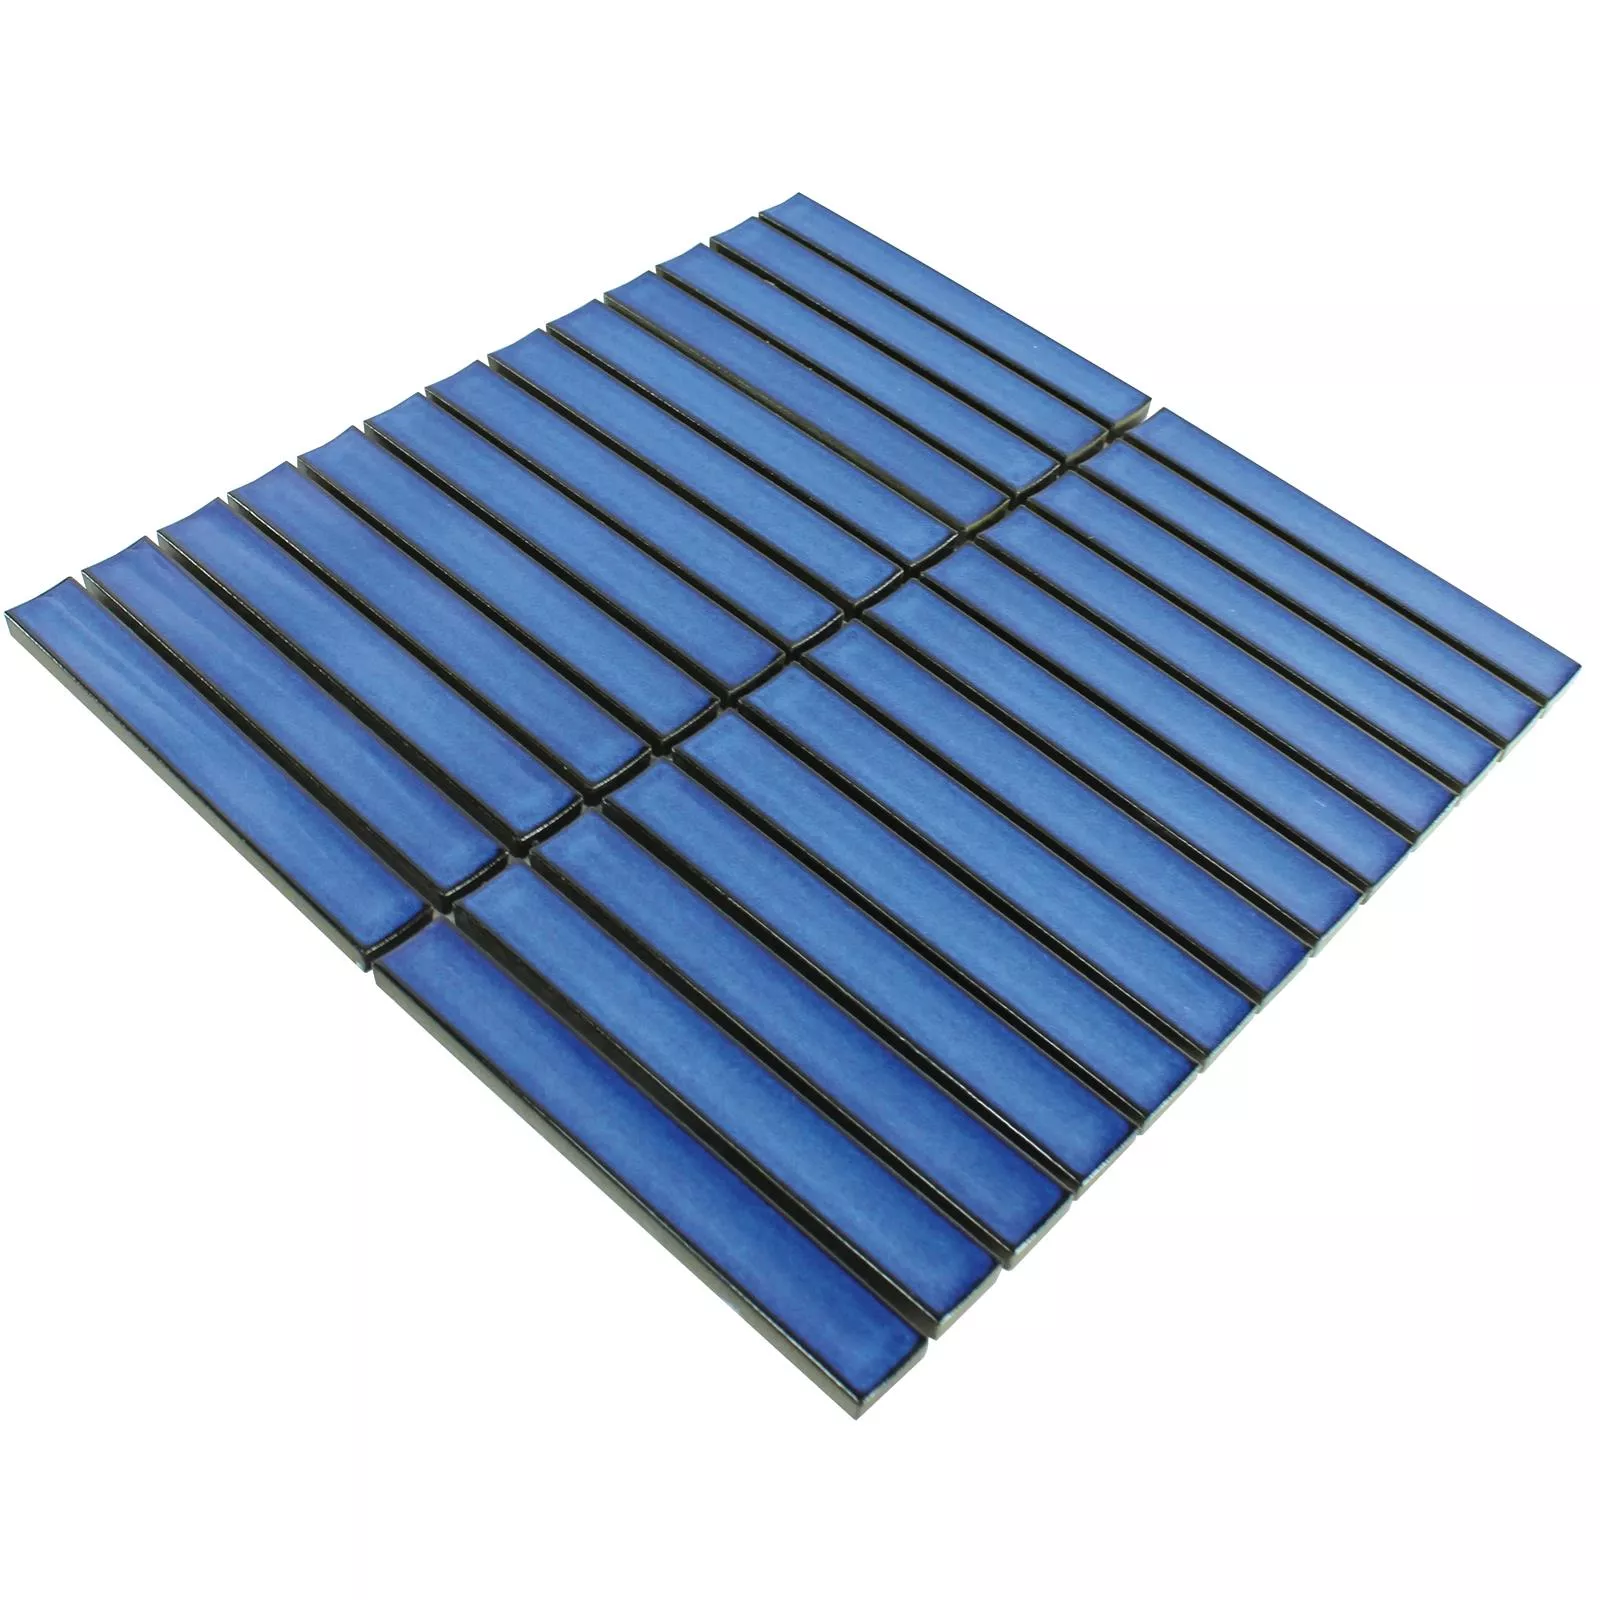 Sample Ceramic Mosaic Tiles Sticks Ontario Blue